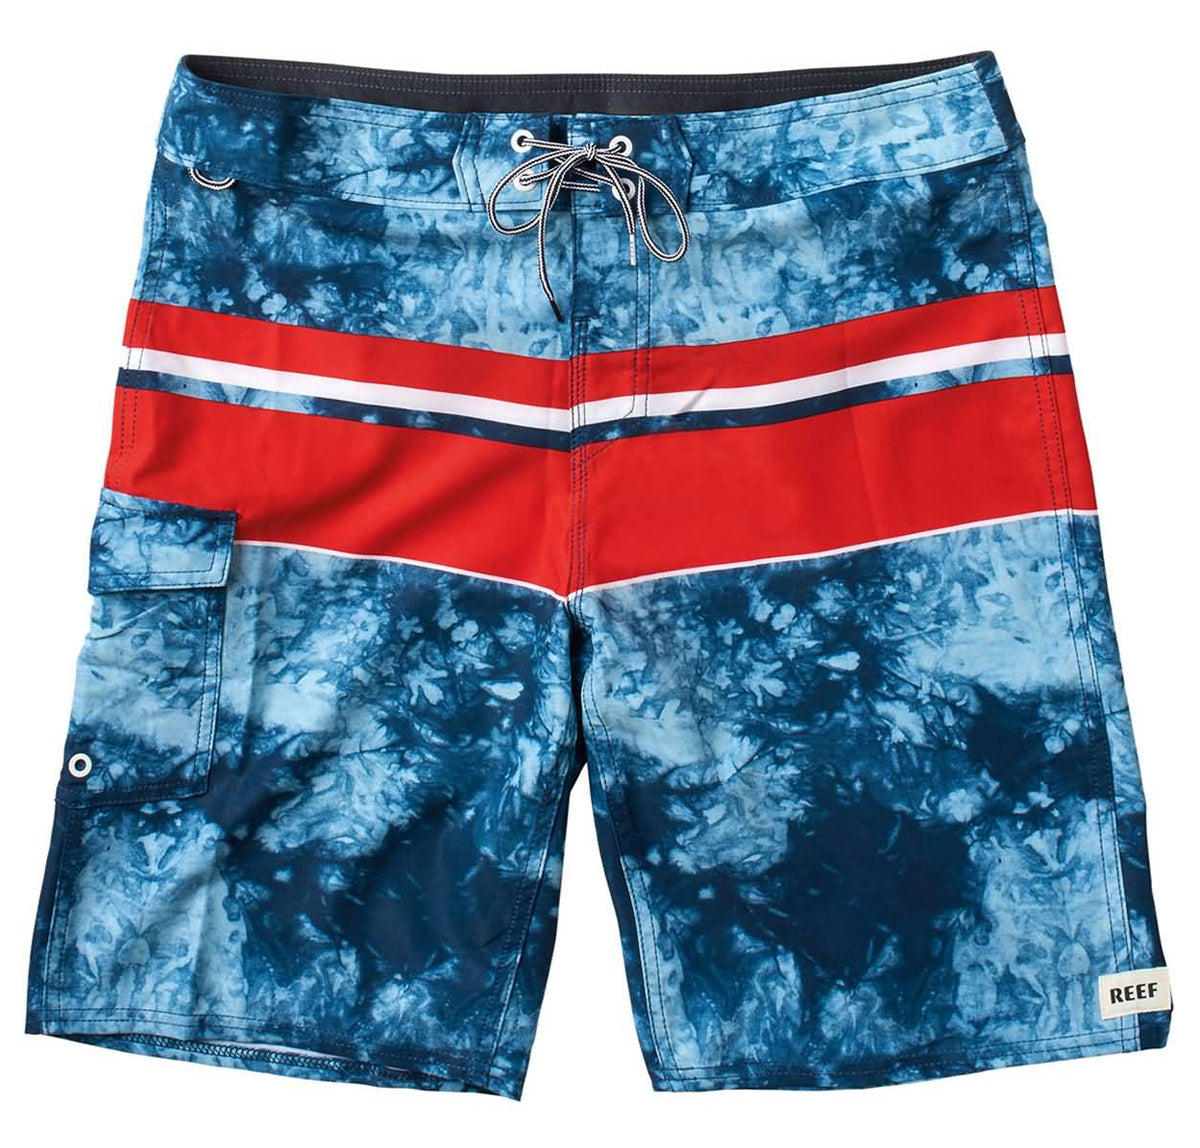 Reef Southern Men's Boardshort Shorts 